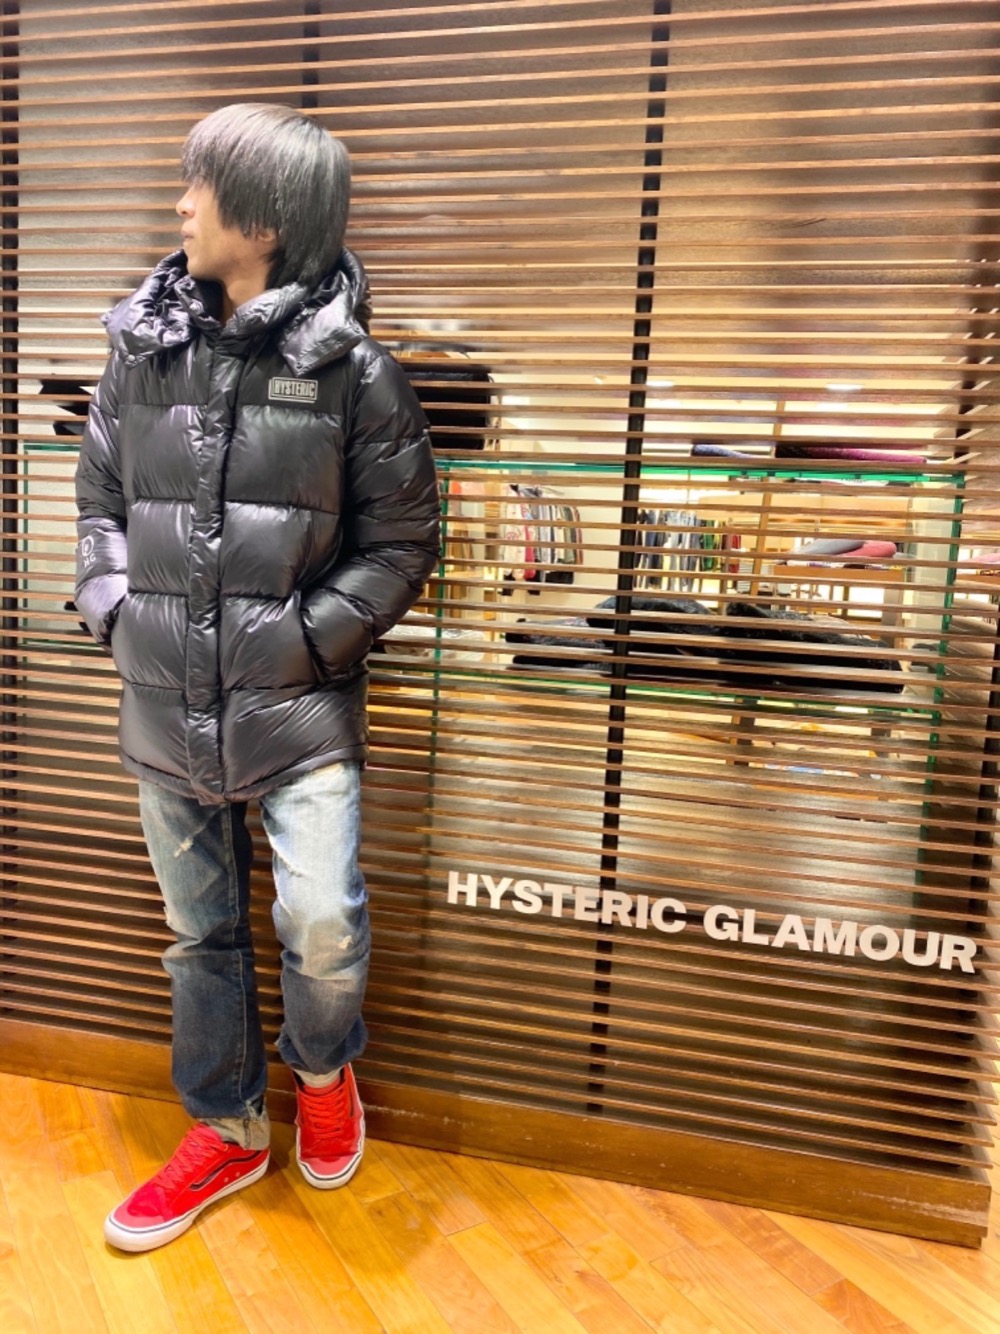 HYSTERIC GLAMOURグランデュオ立川店